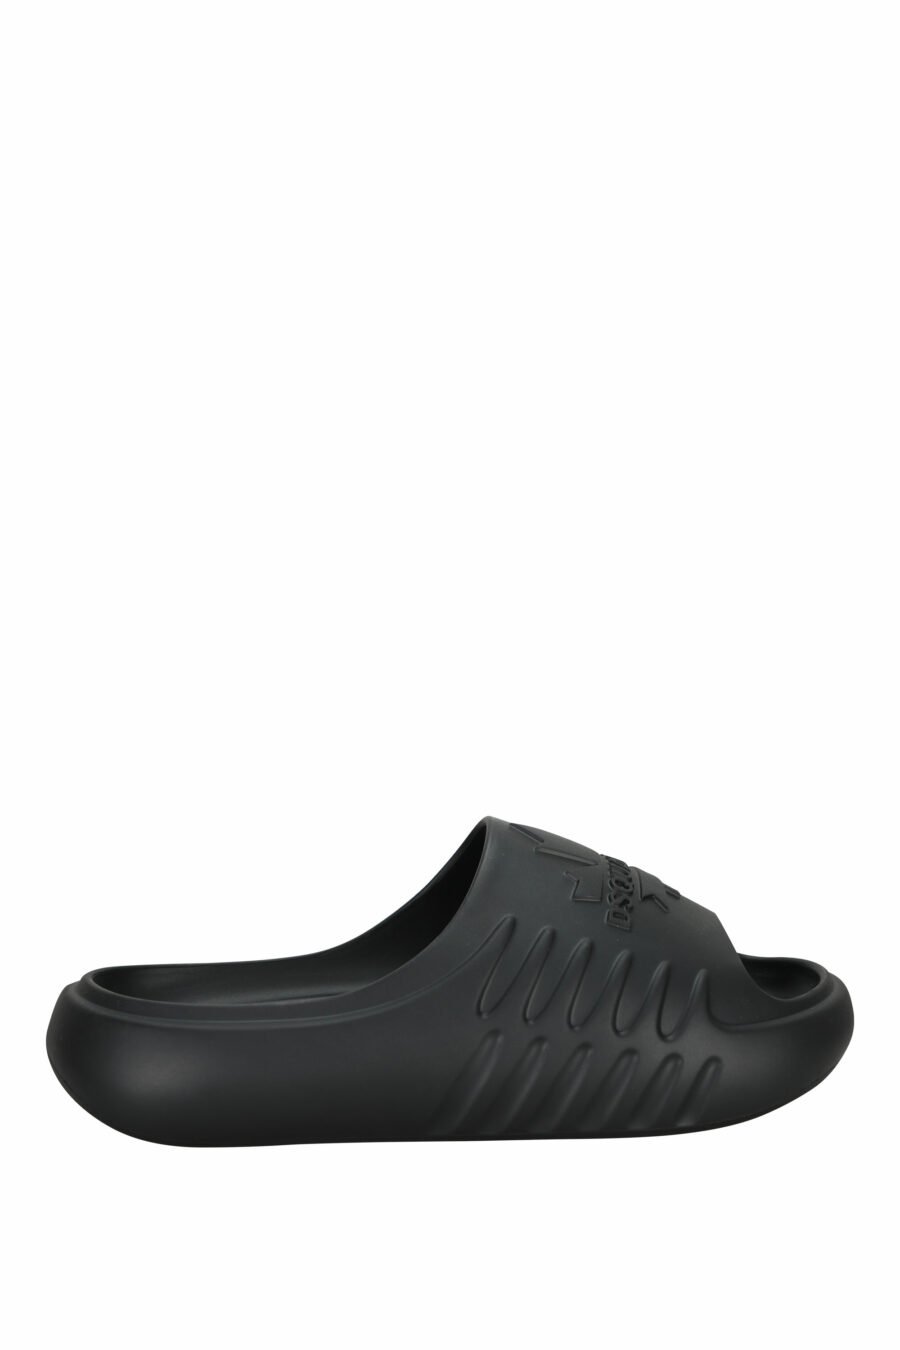 Black rubber flip flops with monochrome logo - 8055777295403